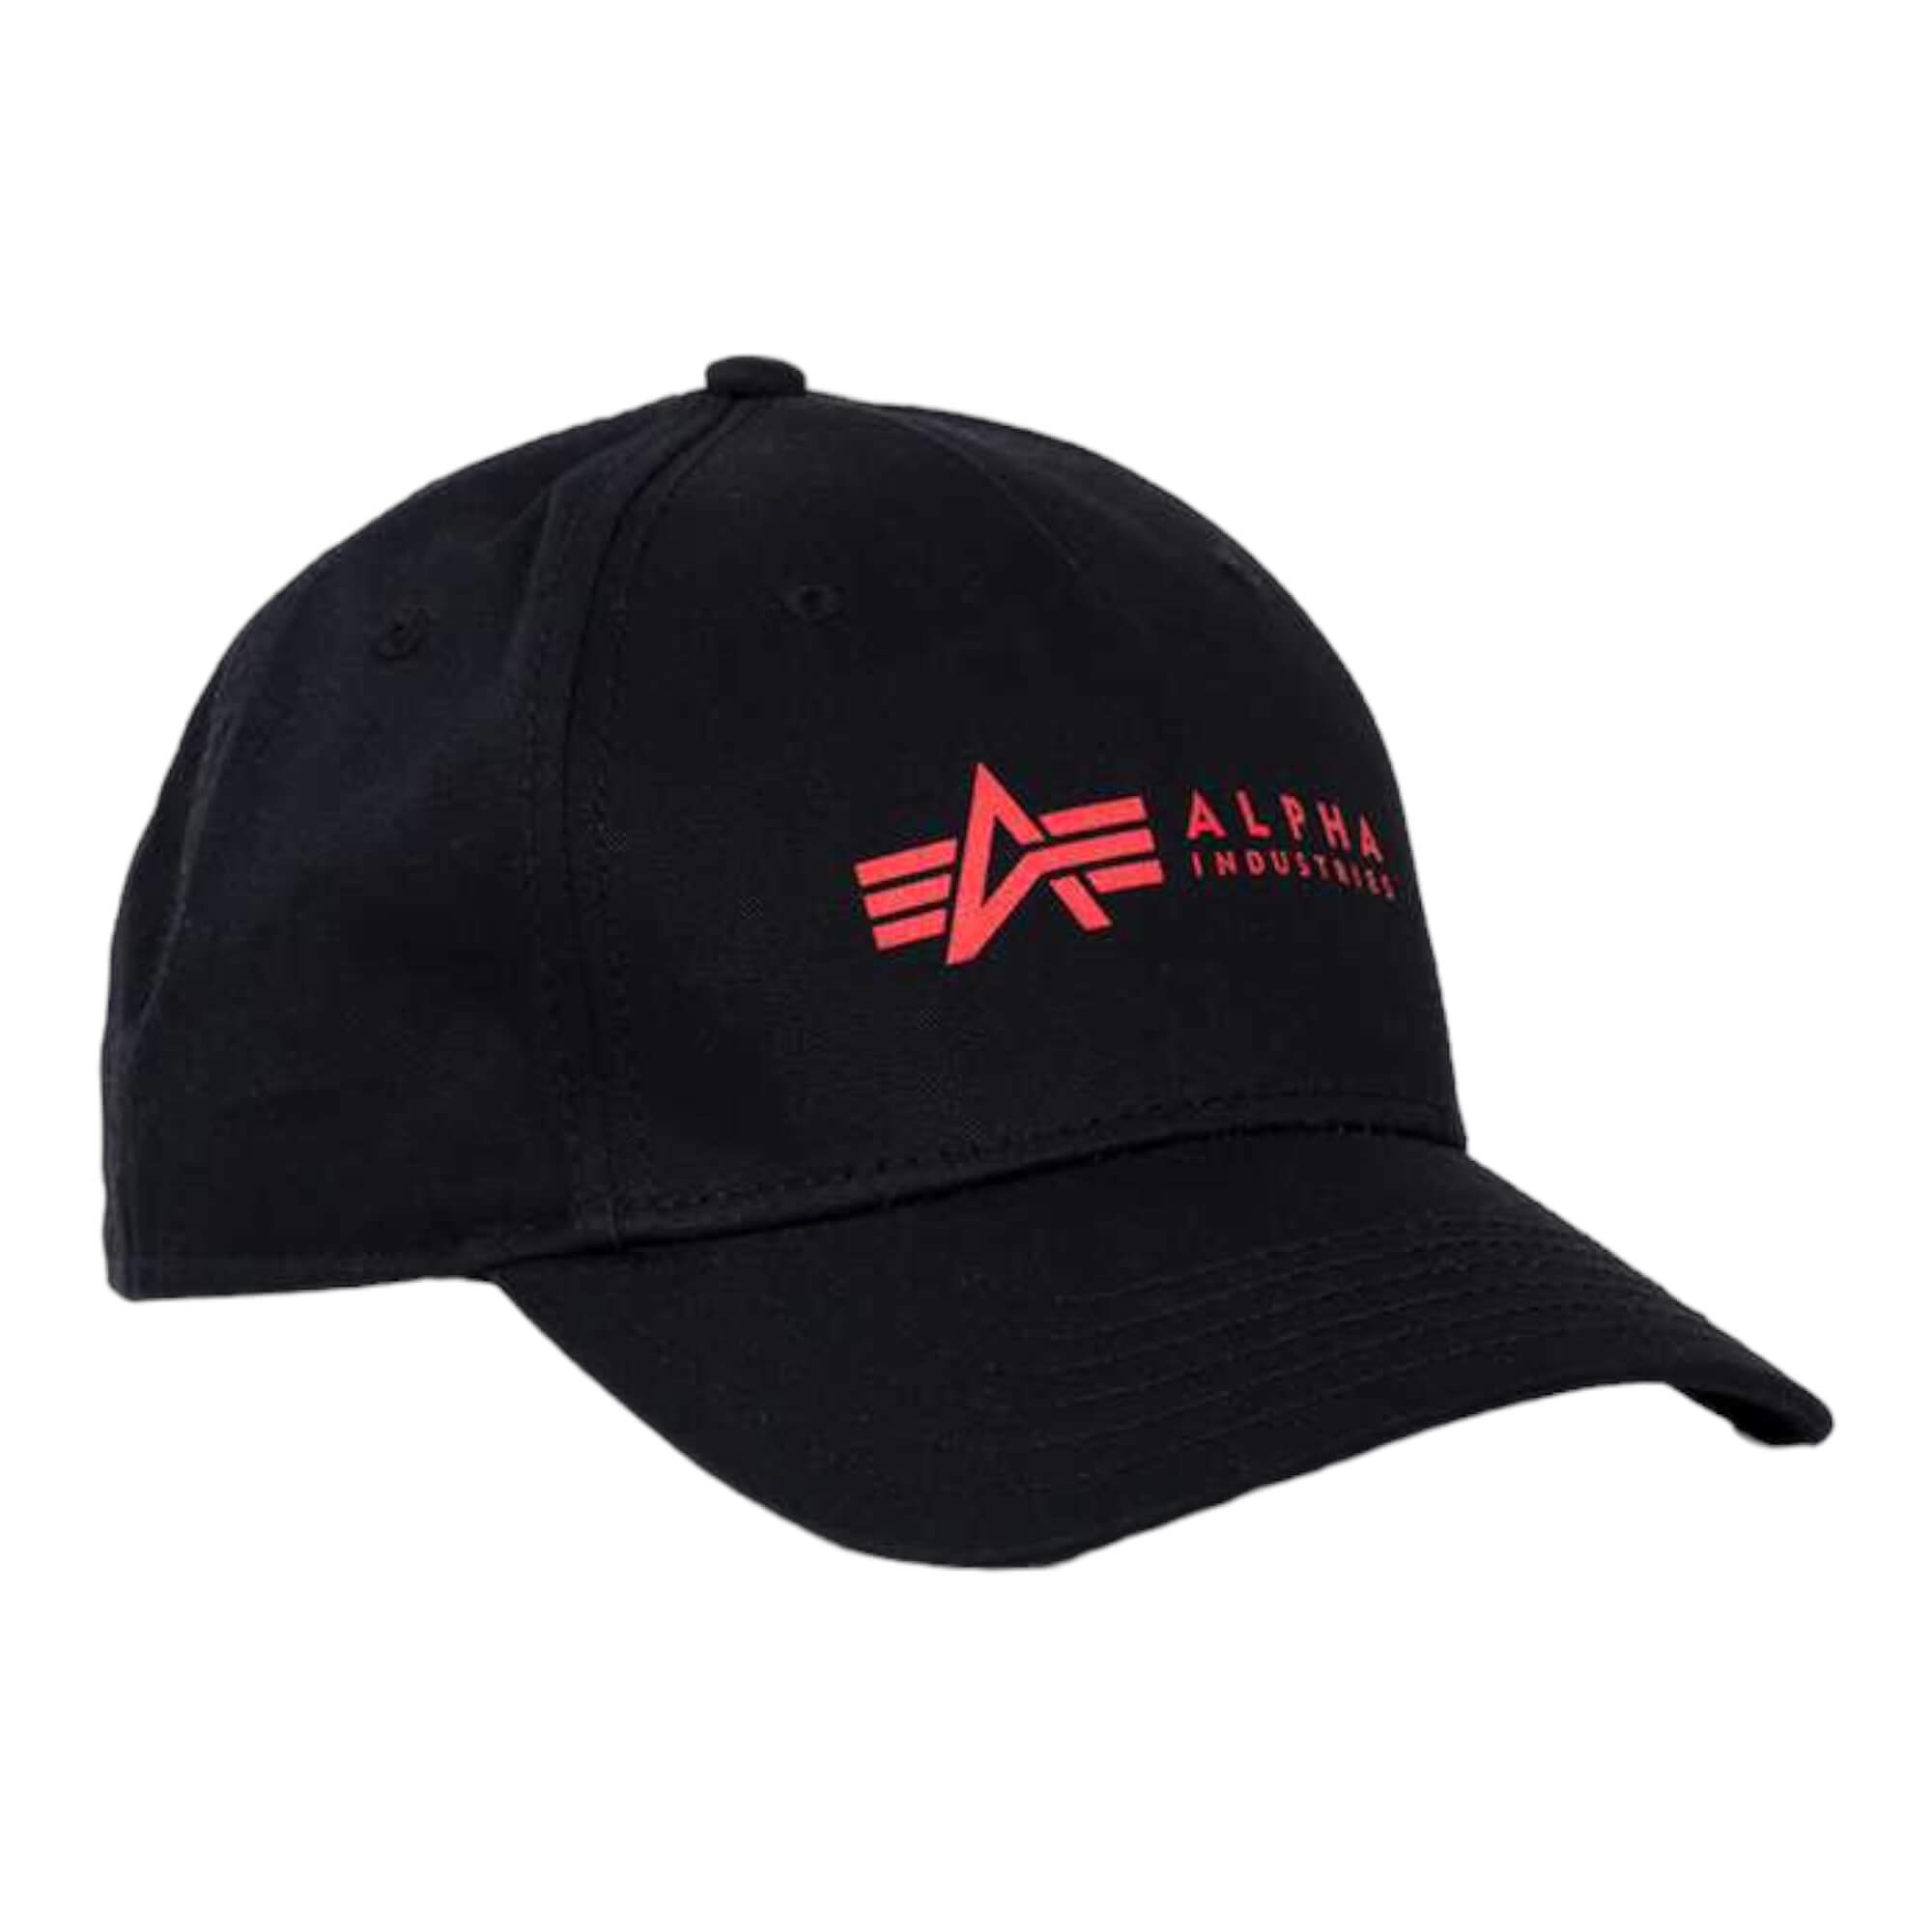 Alpha industries black fuchsia logo alpha cap - Exclusive Clothes